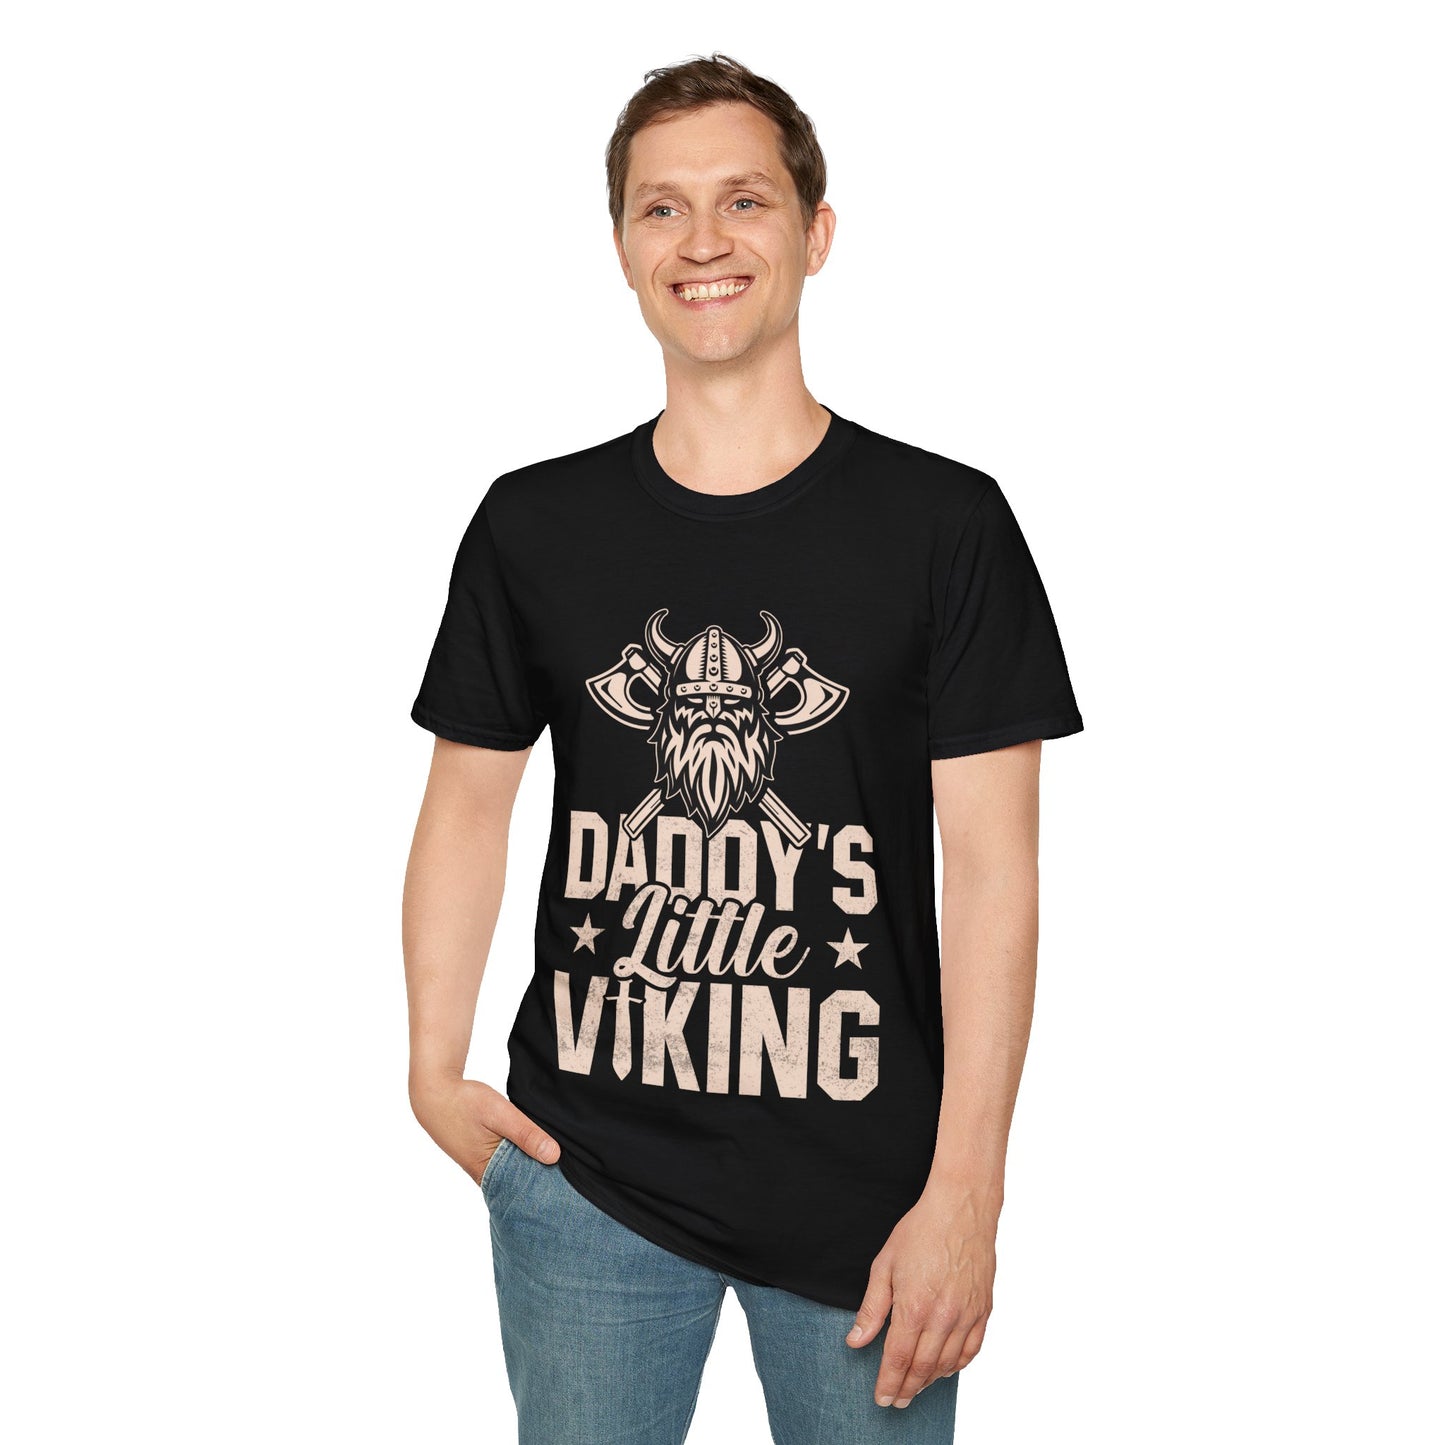 Daddy's Little Viking T-Shirt